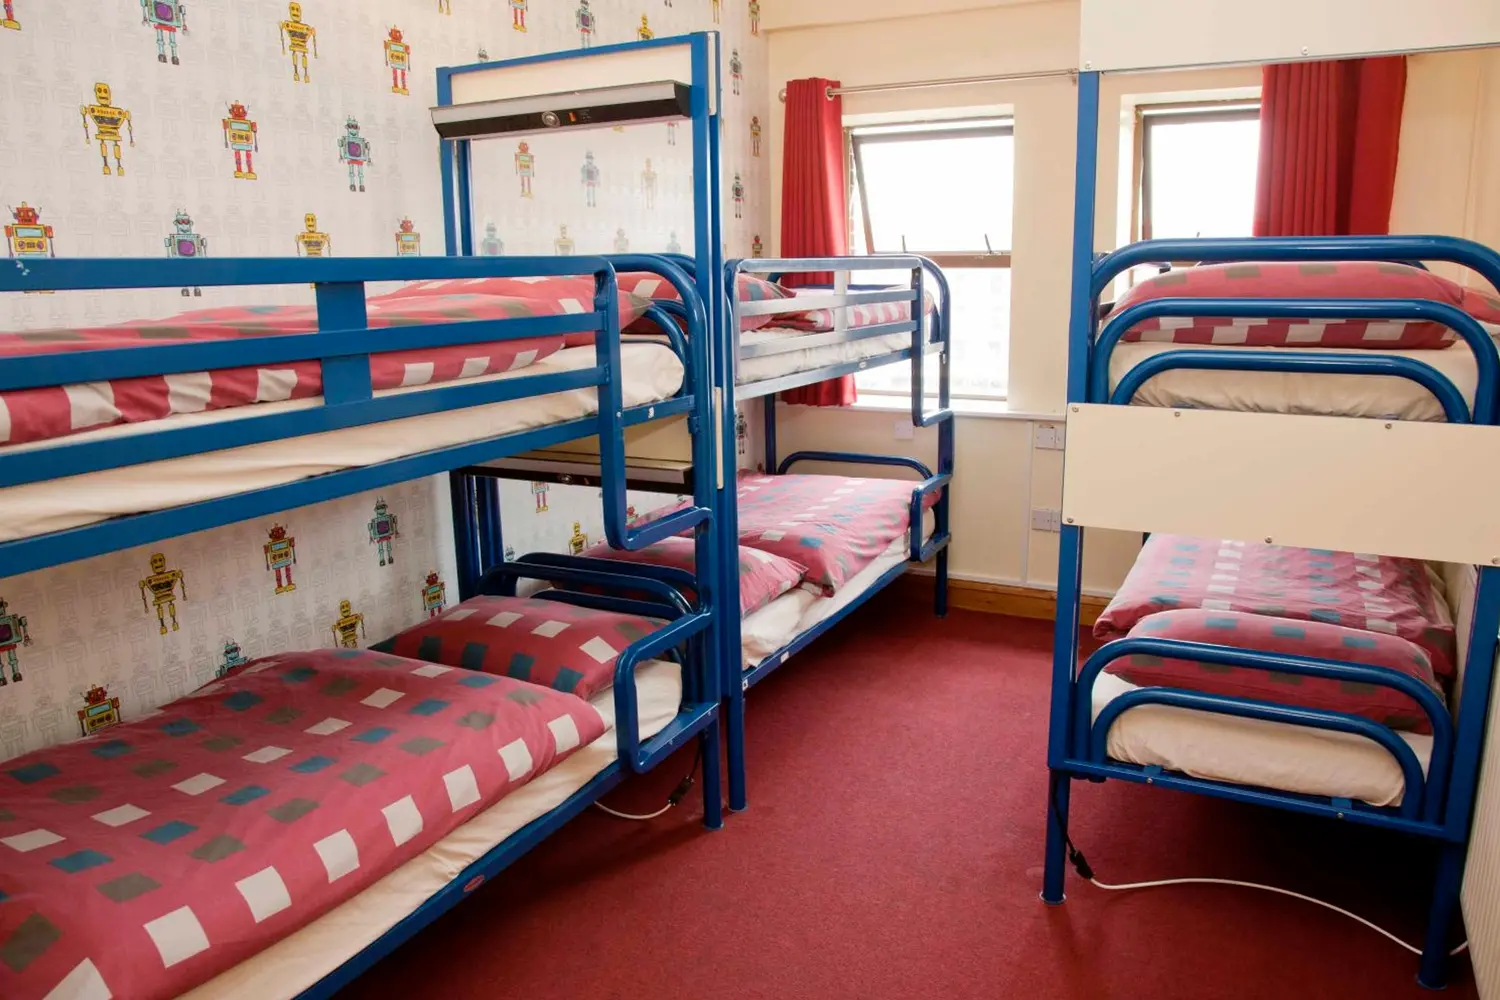 Dorm room at the Abigails Hostel in Dublin